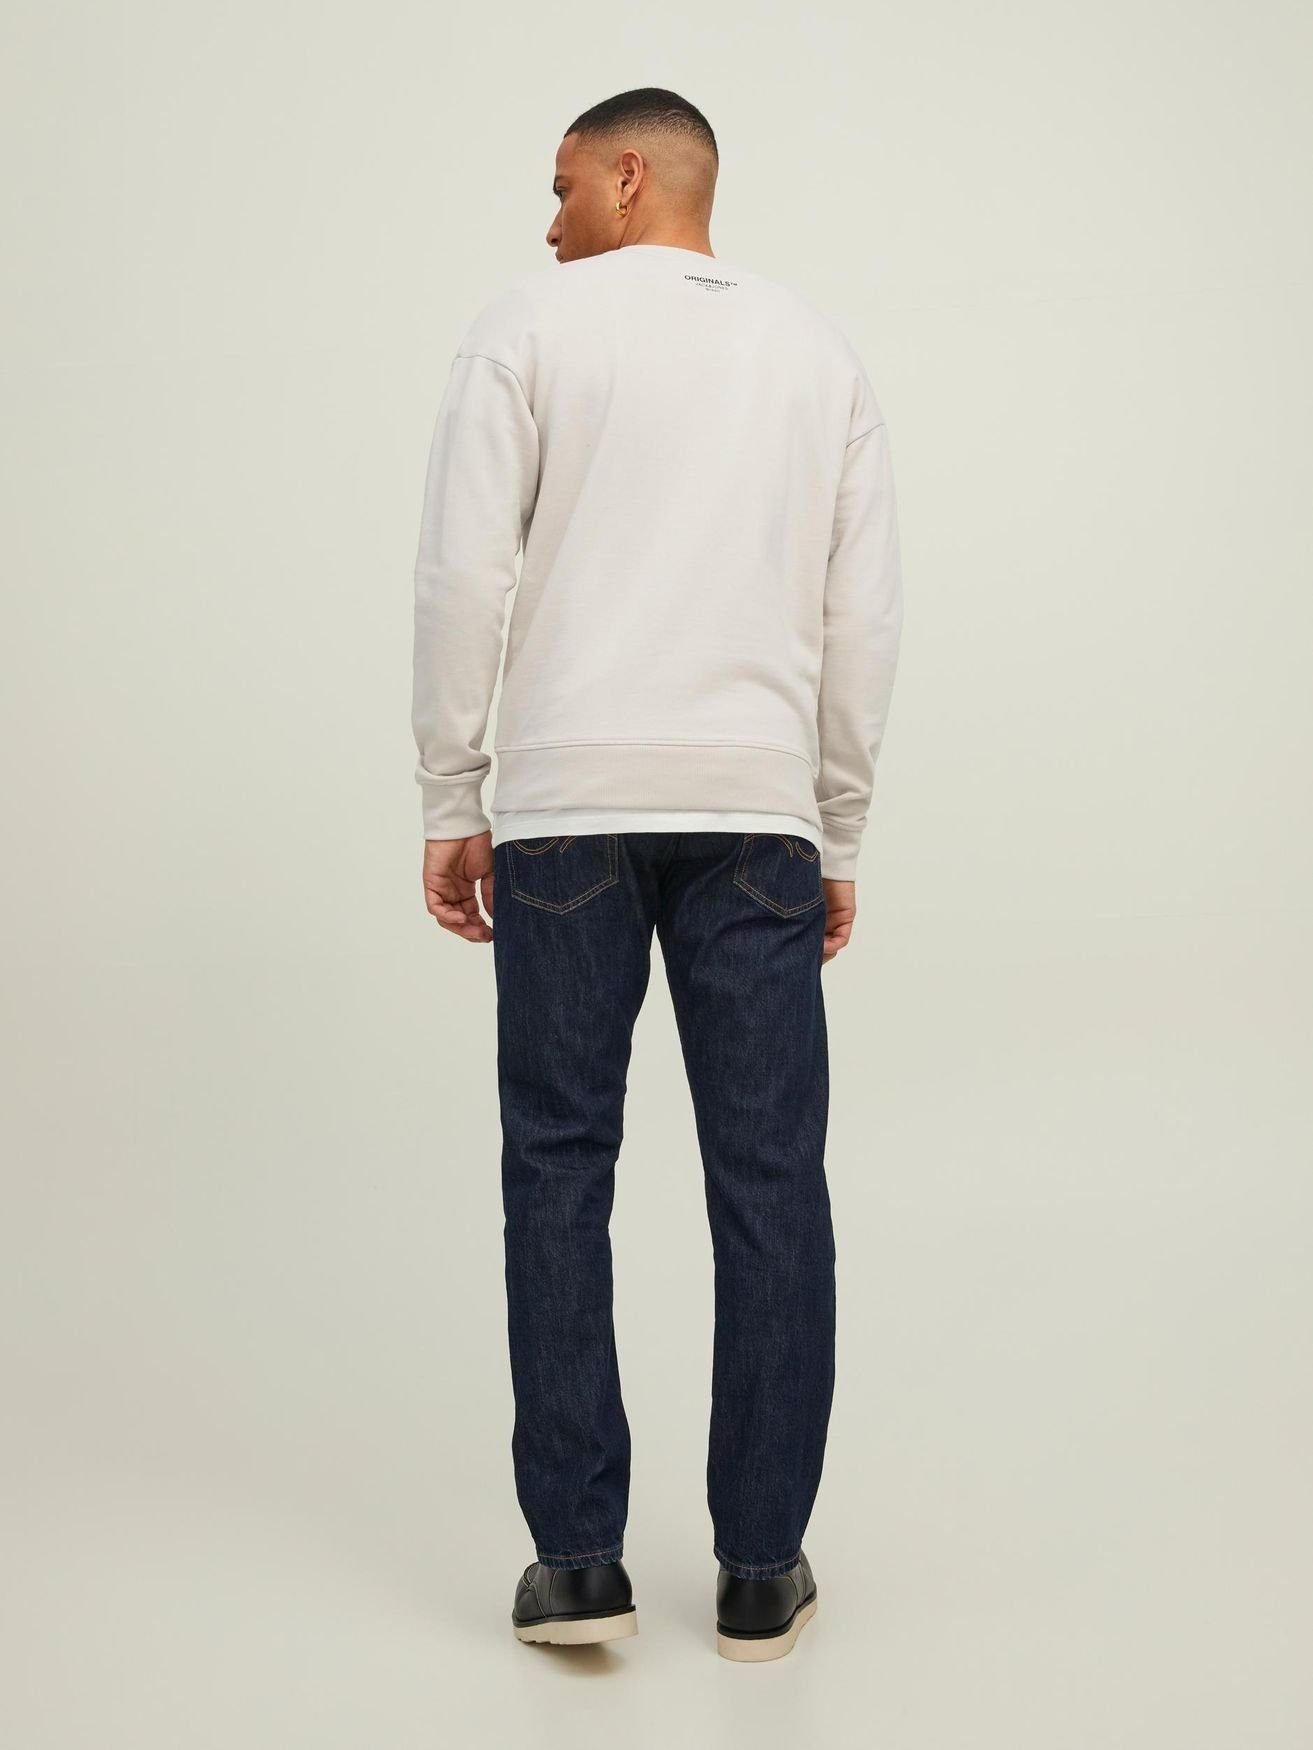 in Jones Sand Jack Sweater Basic 4672 Sweatshirt Rundhals Shirt Langarm & JORCLEAN Pullover